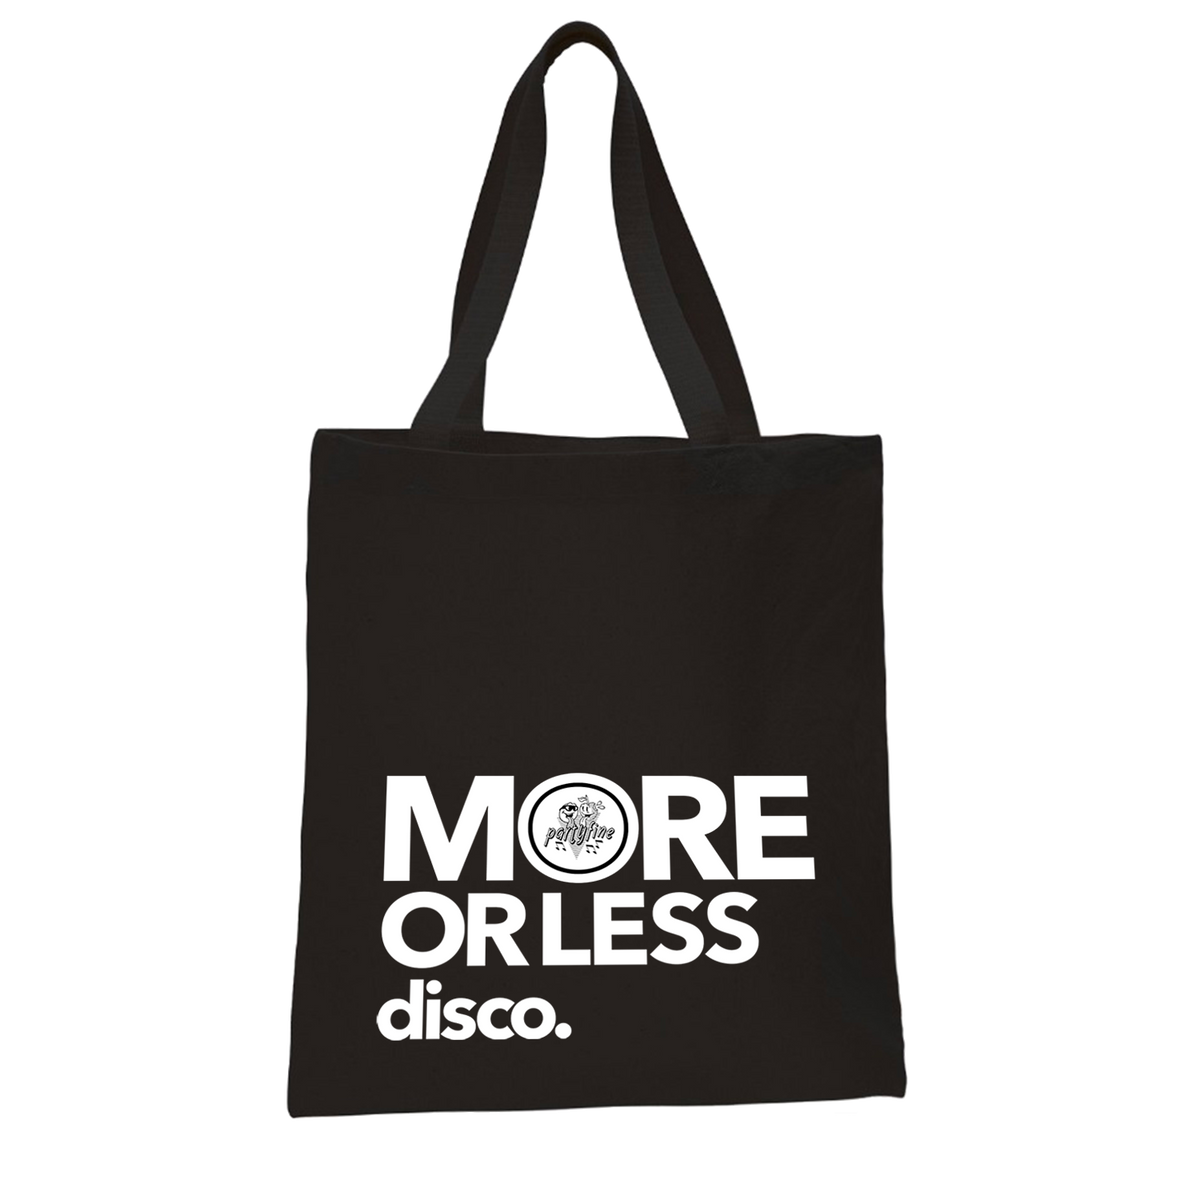 Tote Bag - More or Less Disco